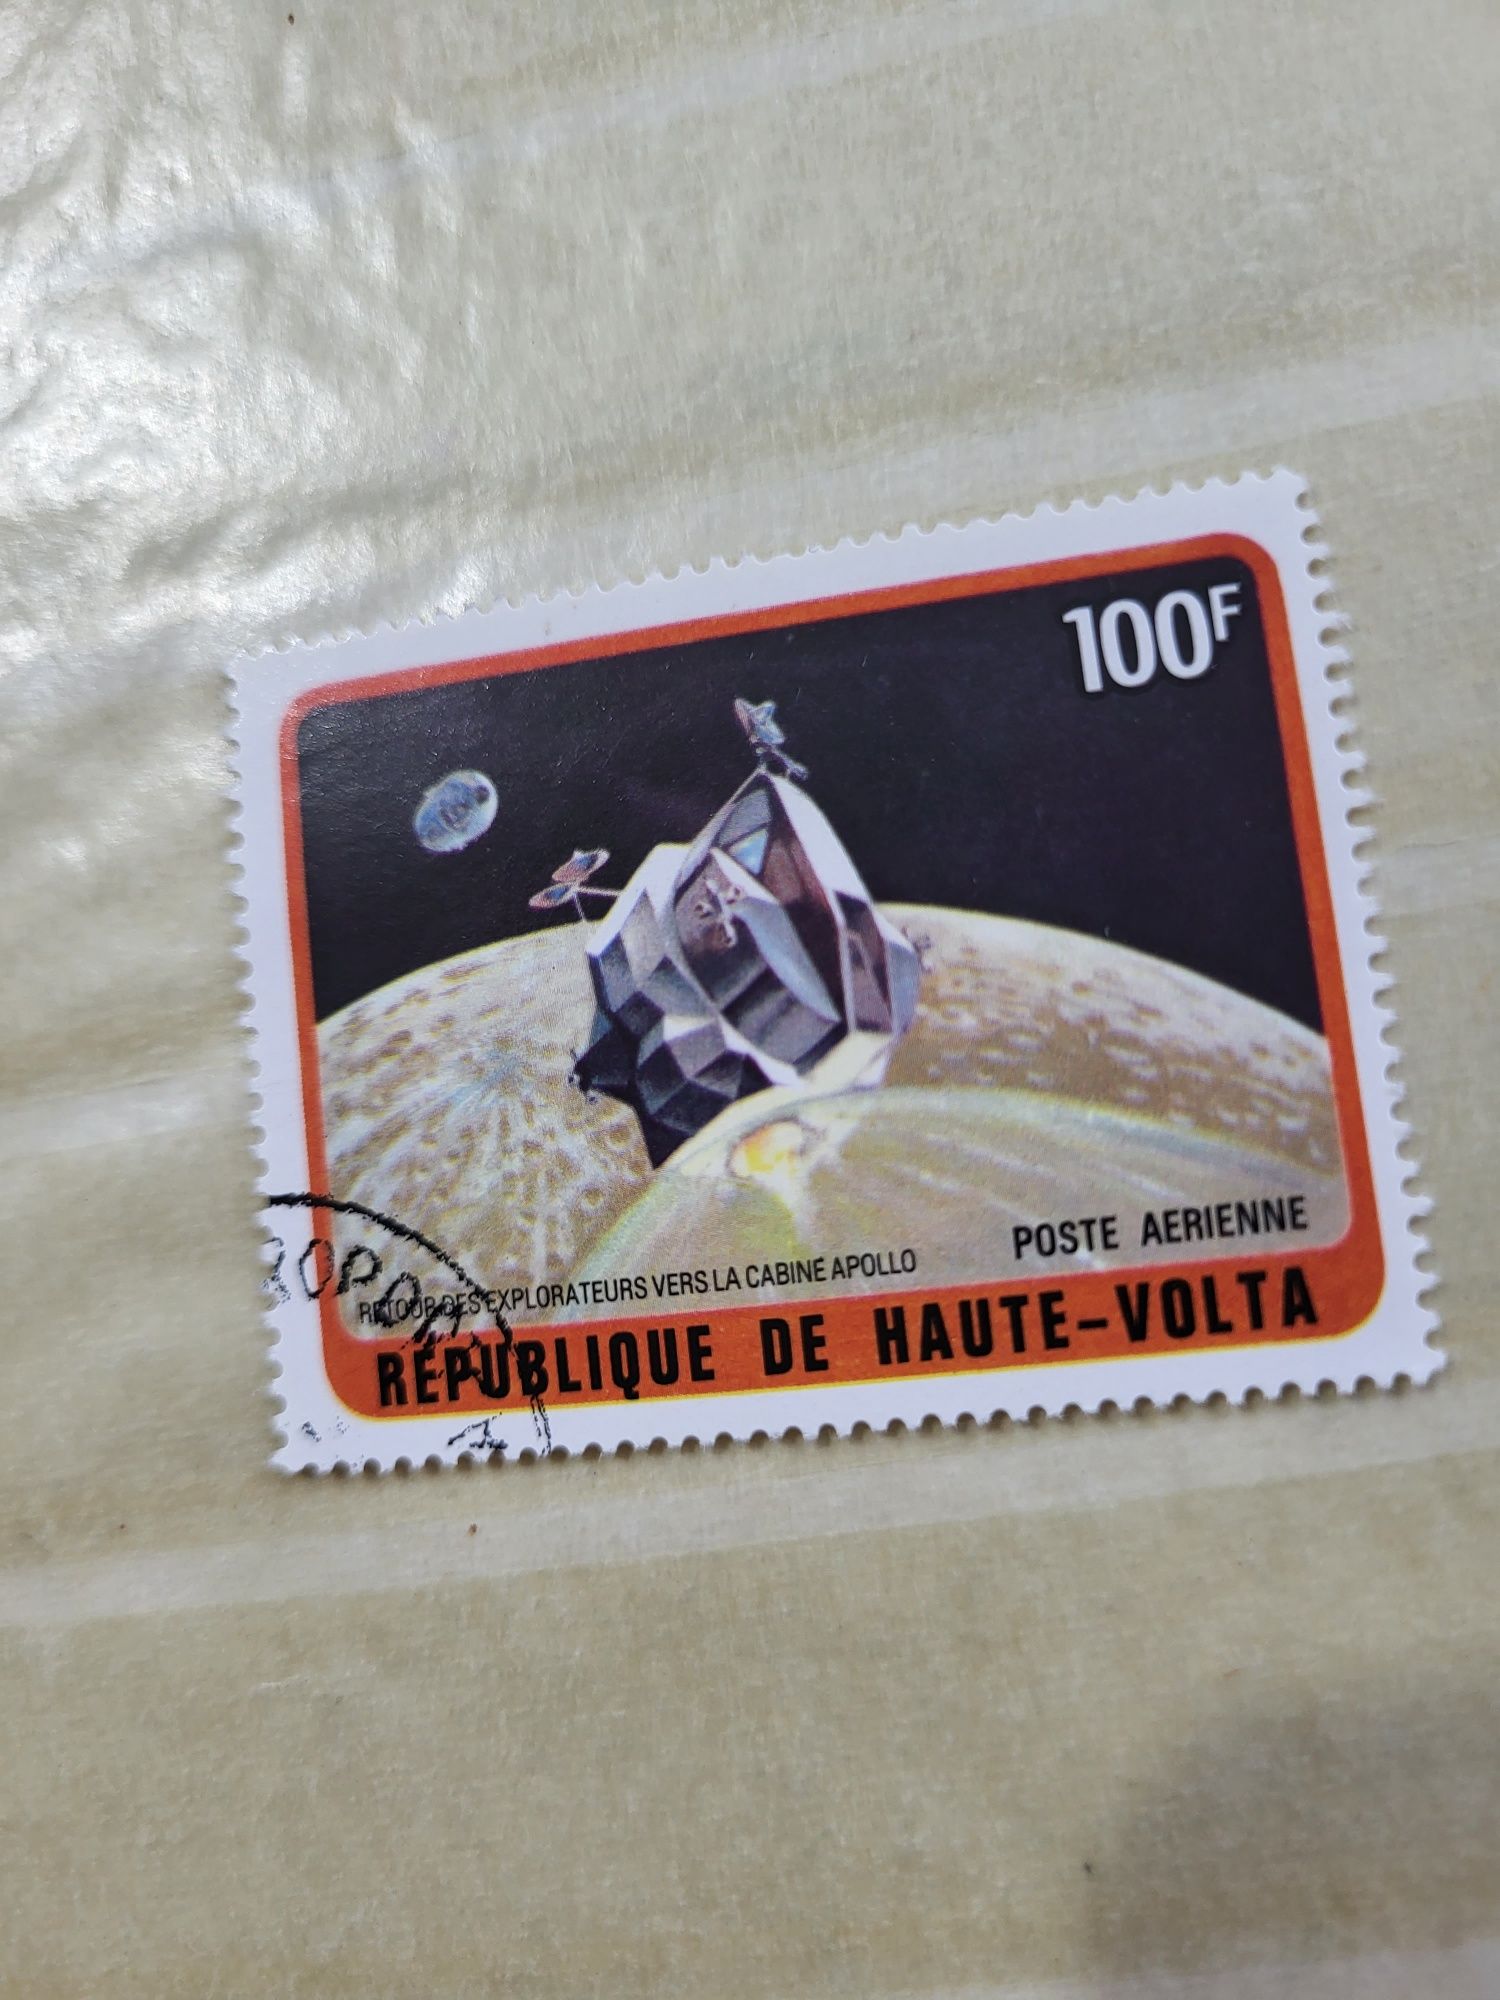 Serie timbre spațiale